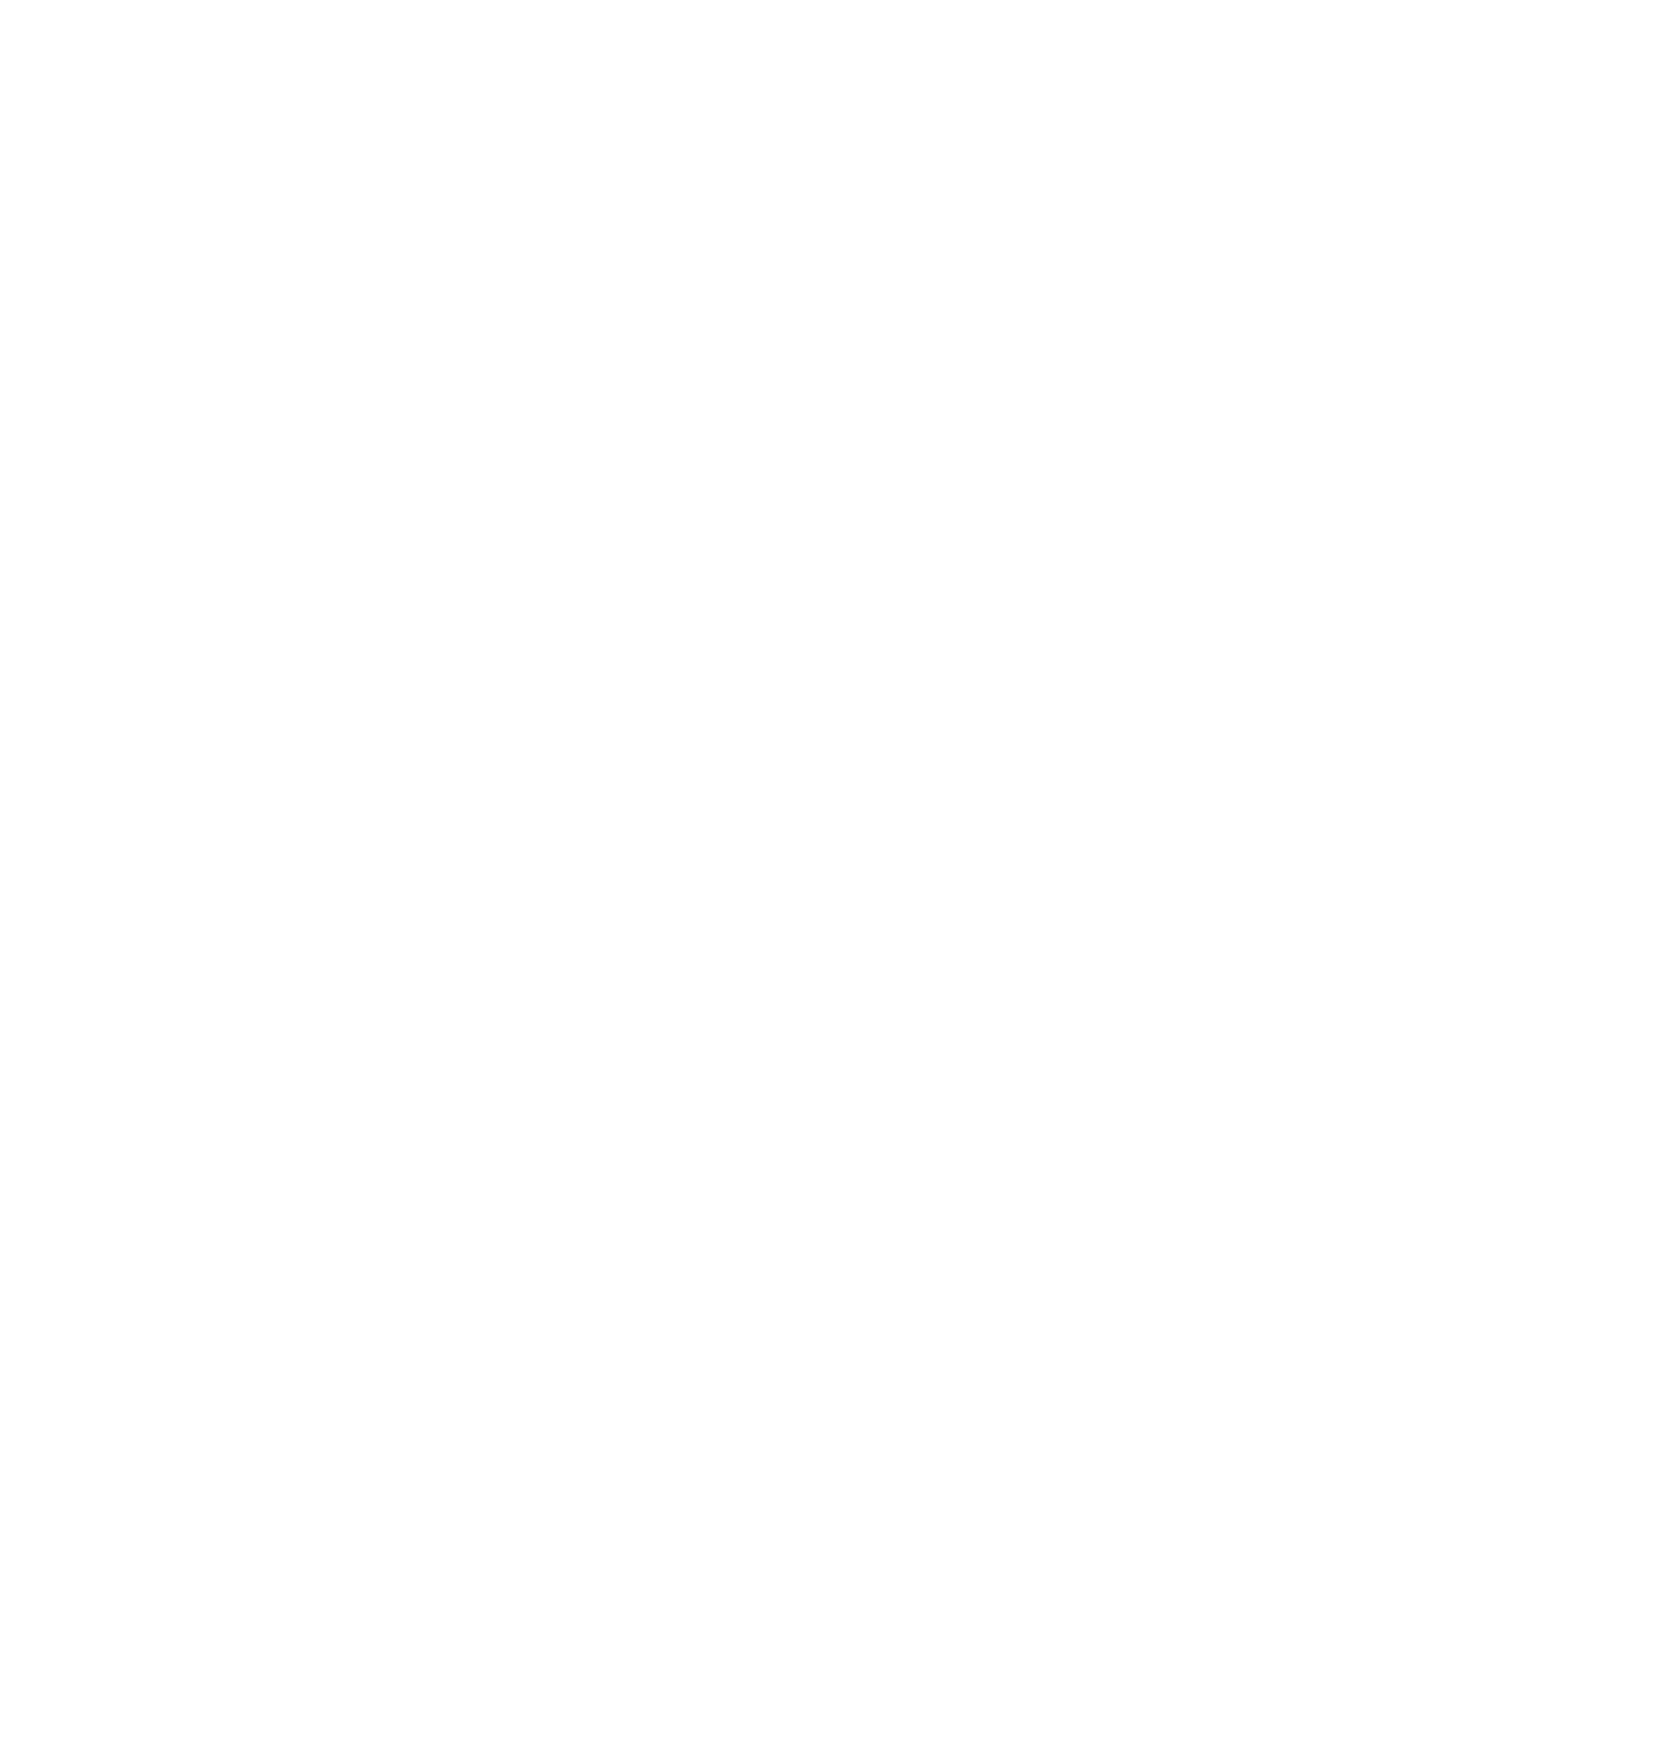 F3T RUSSION PYLON RACING CLUB